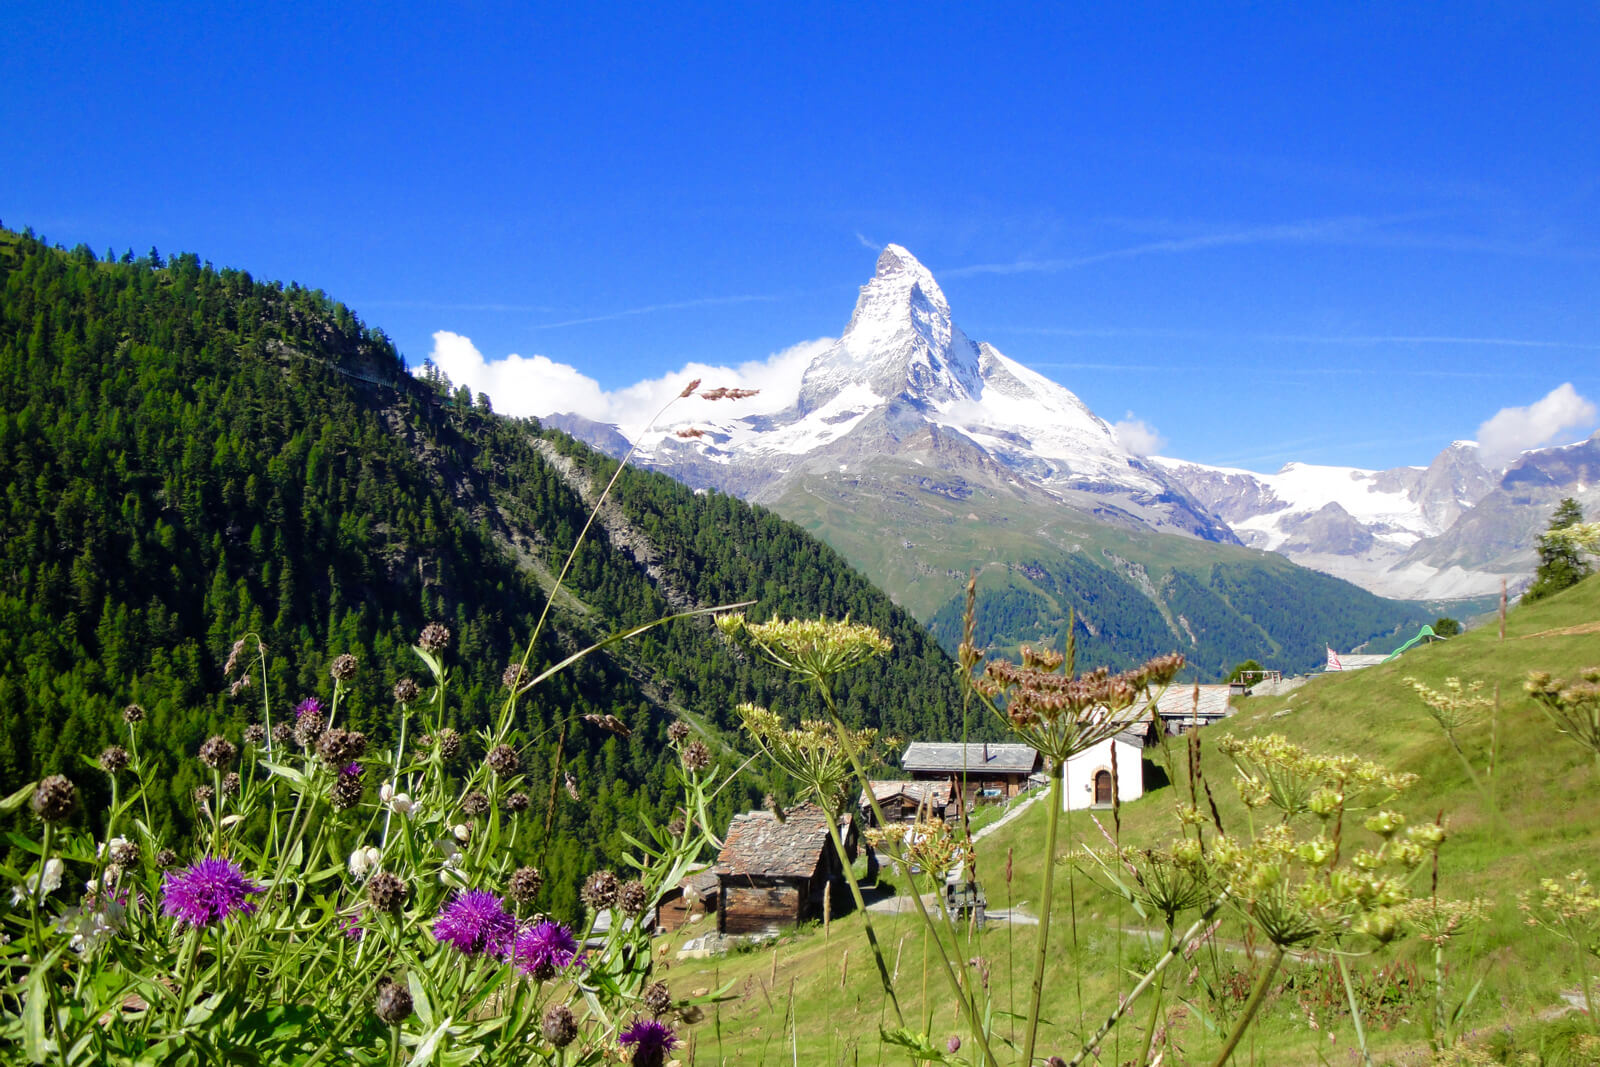 A Visit to the Village of Zermatt and the Matterhorn in 